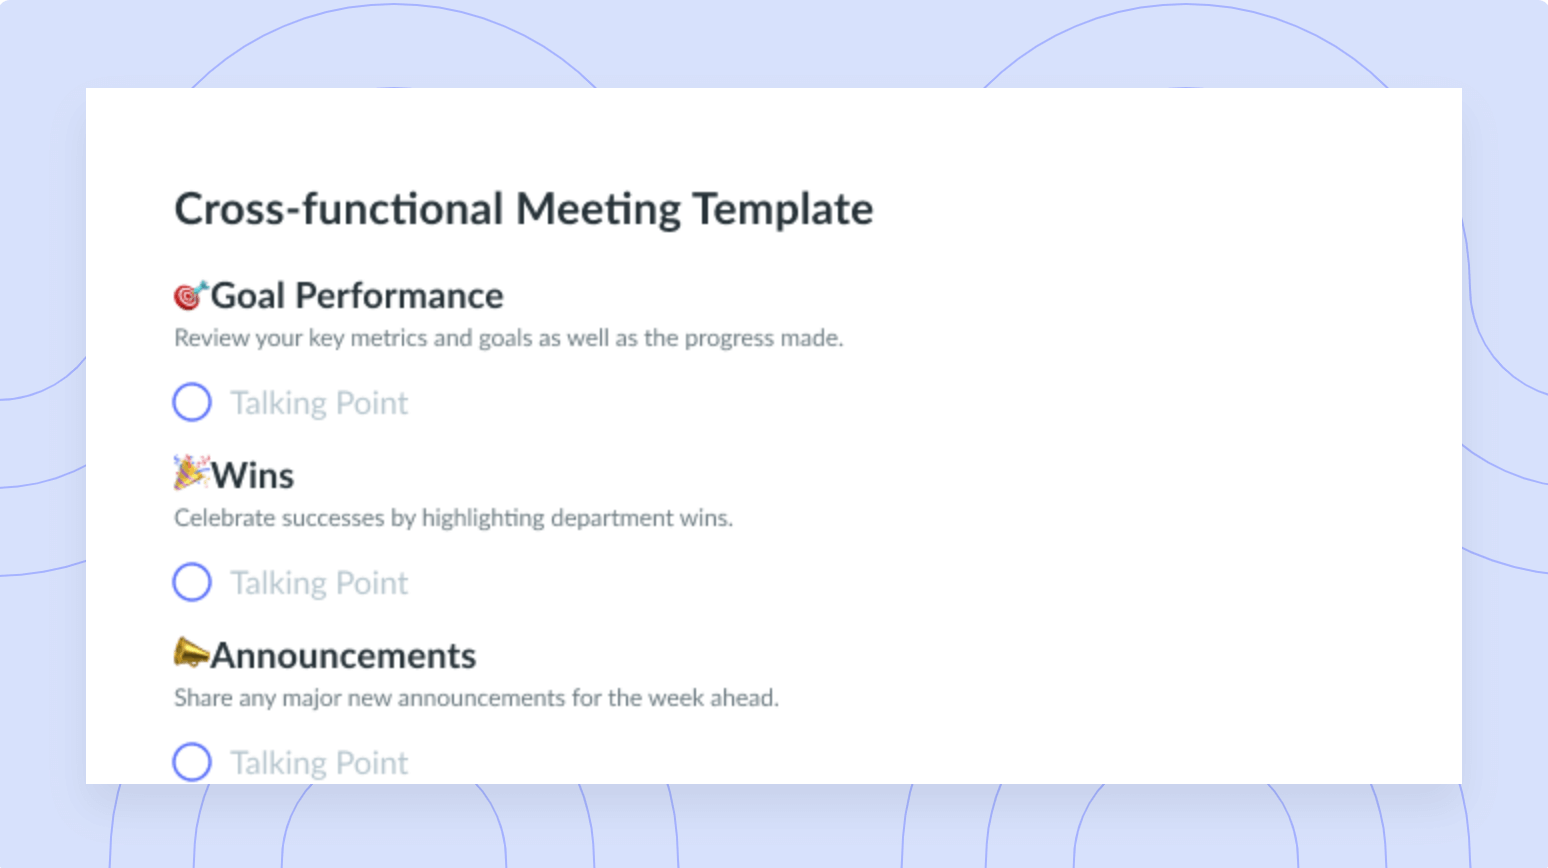 Cross-functional Meeting Template